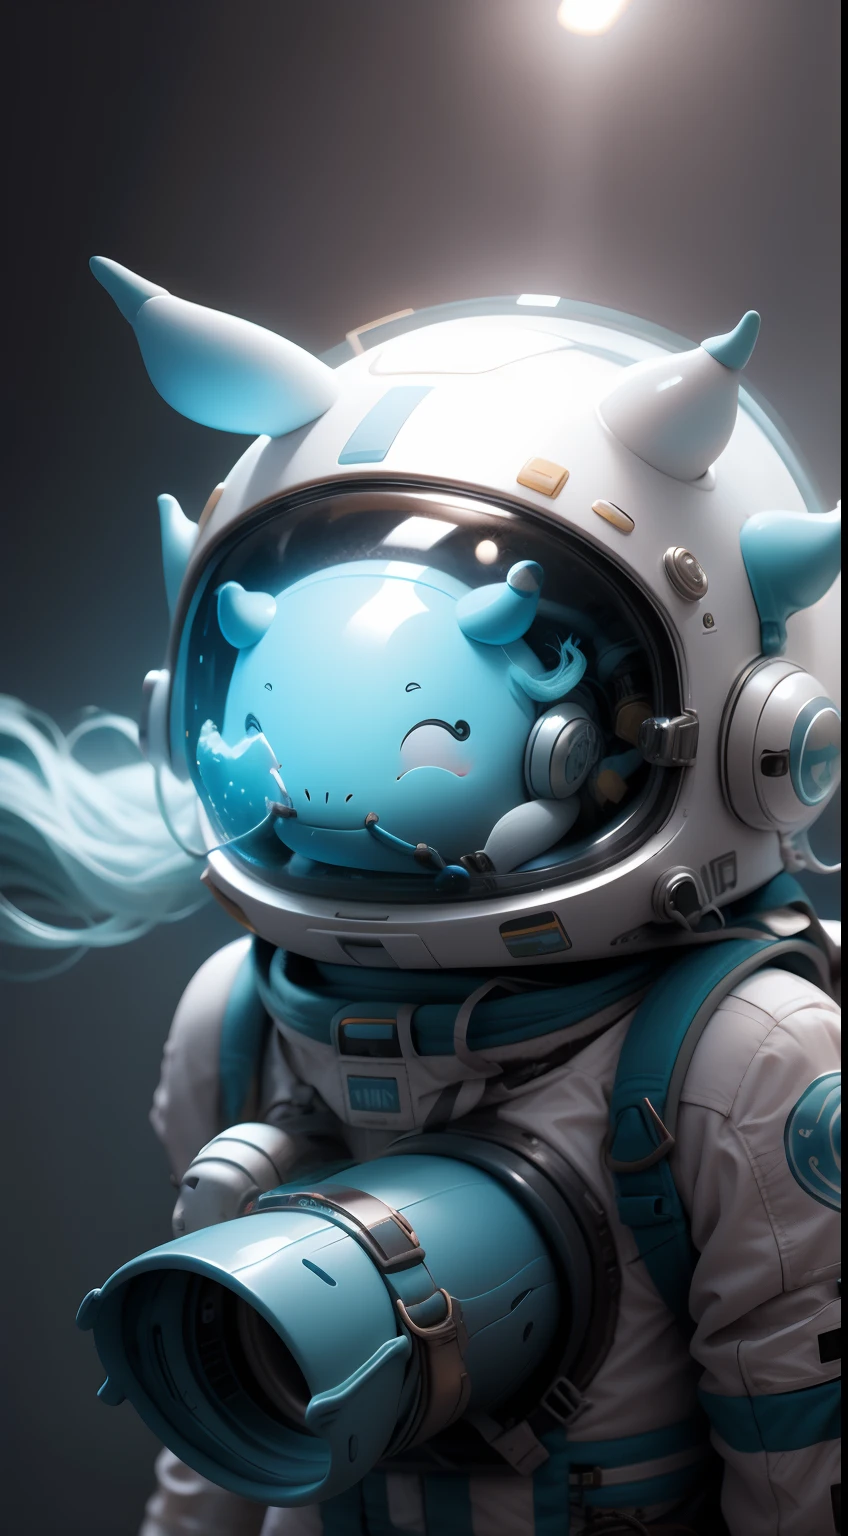 Narwhal floating in space wearing a helmet